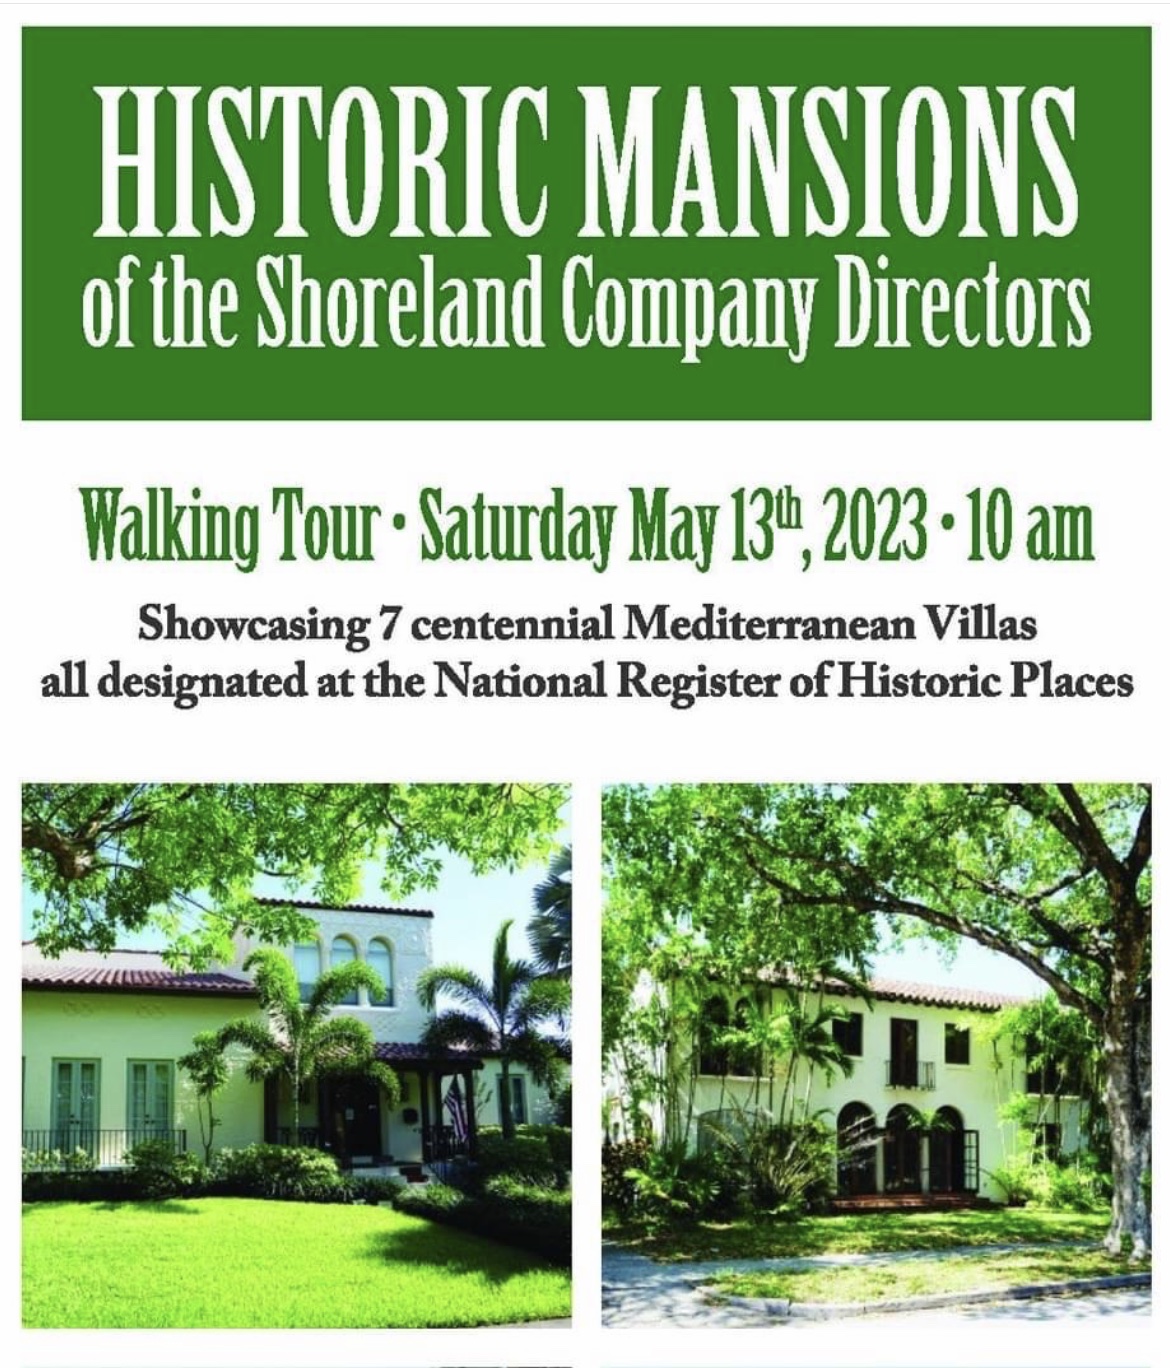 Historic Mansions Tour